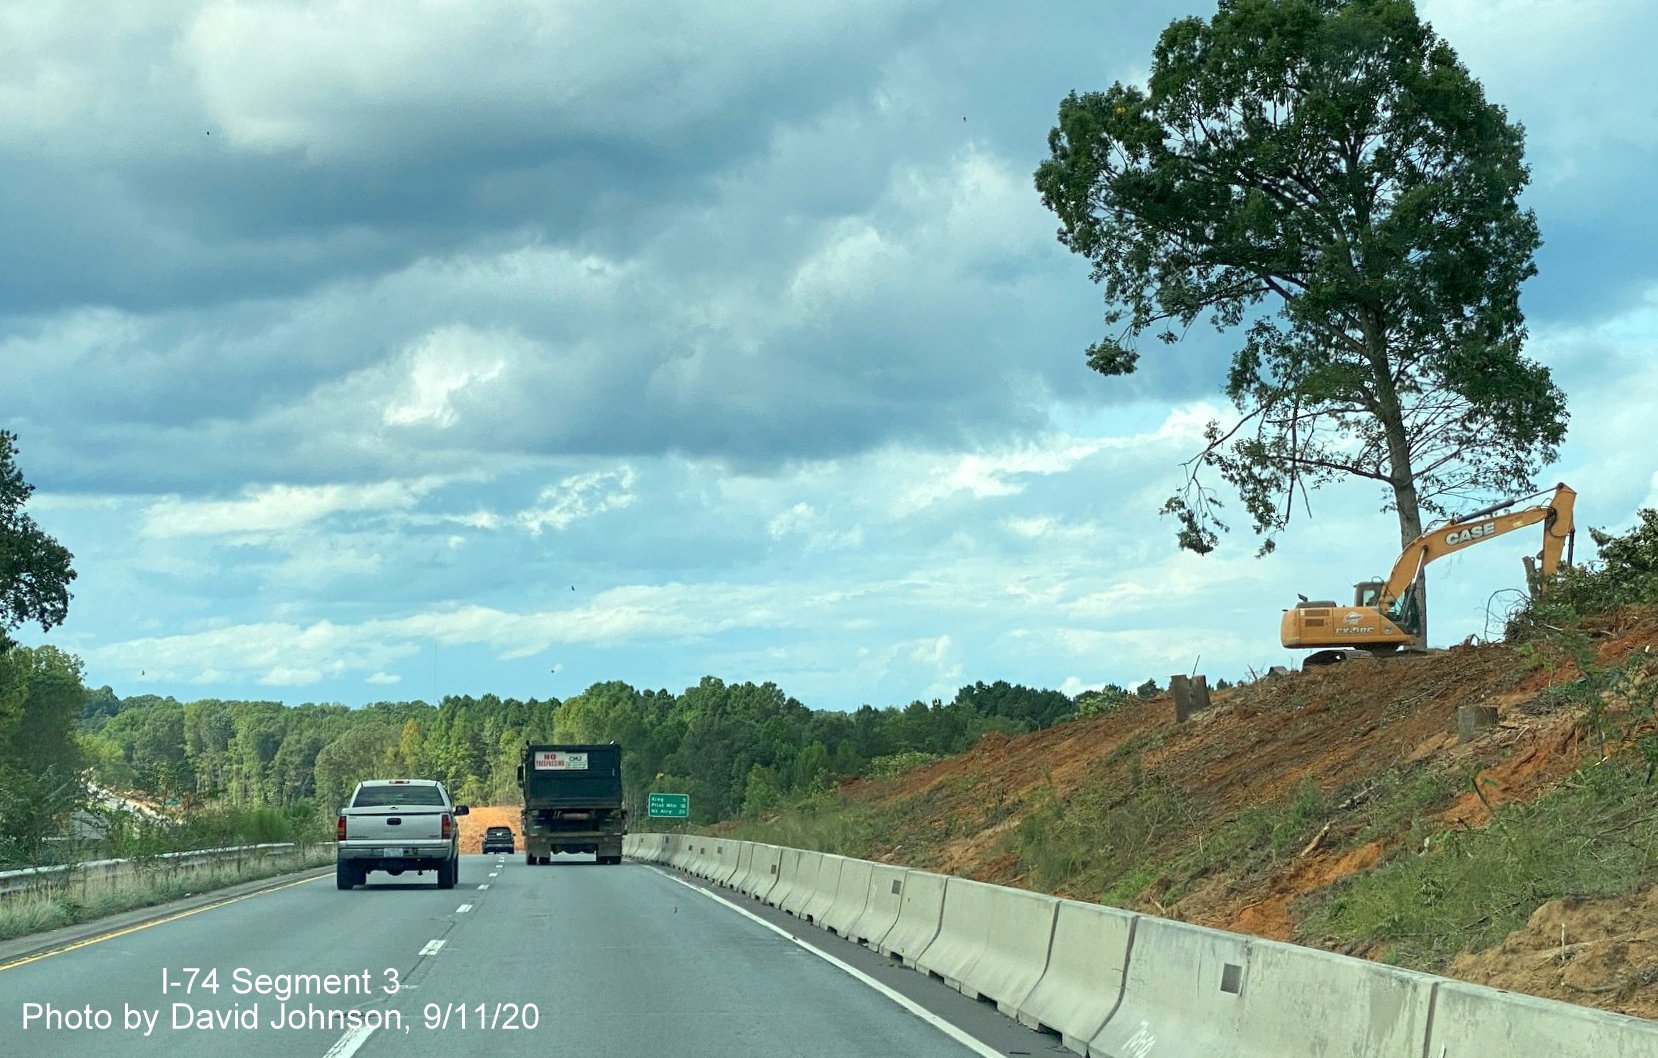 Image of widening construction along US 52 North beyond future I-74 Winston Salem Northern Beltway interchange, by David Johnson September 2020